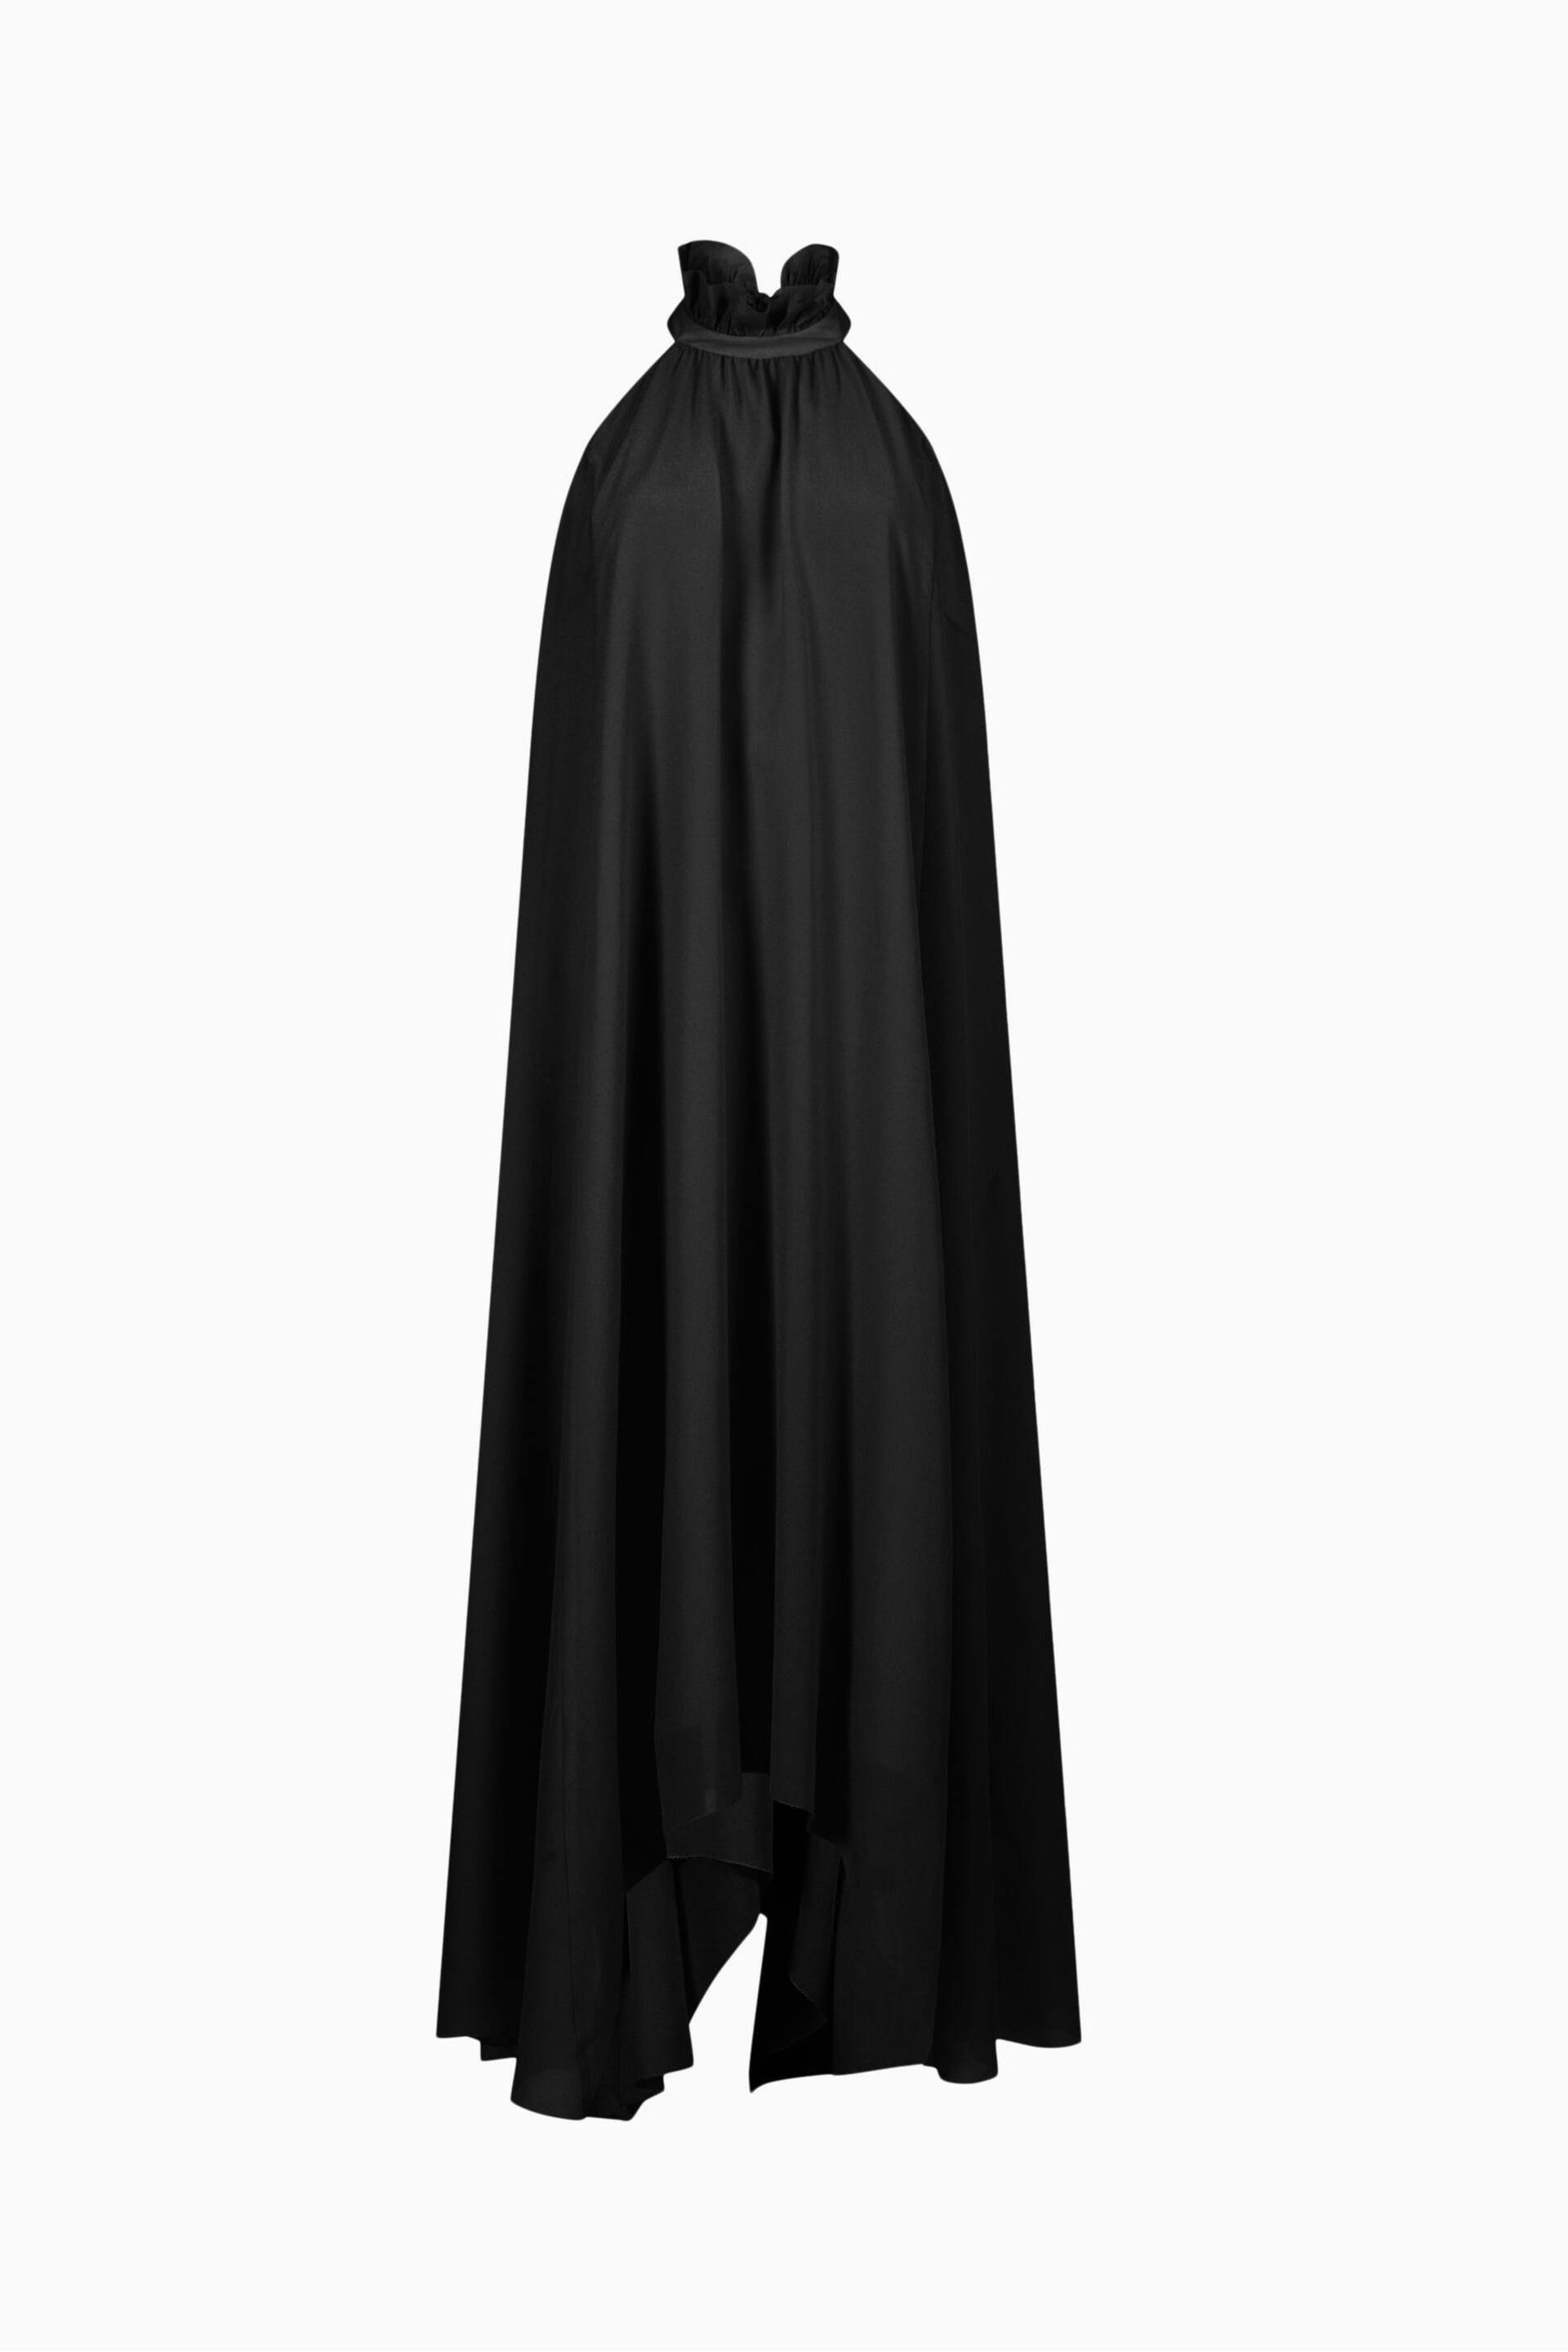 AllSaints Black Alaya Dress - Image 7 of 7